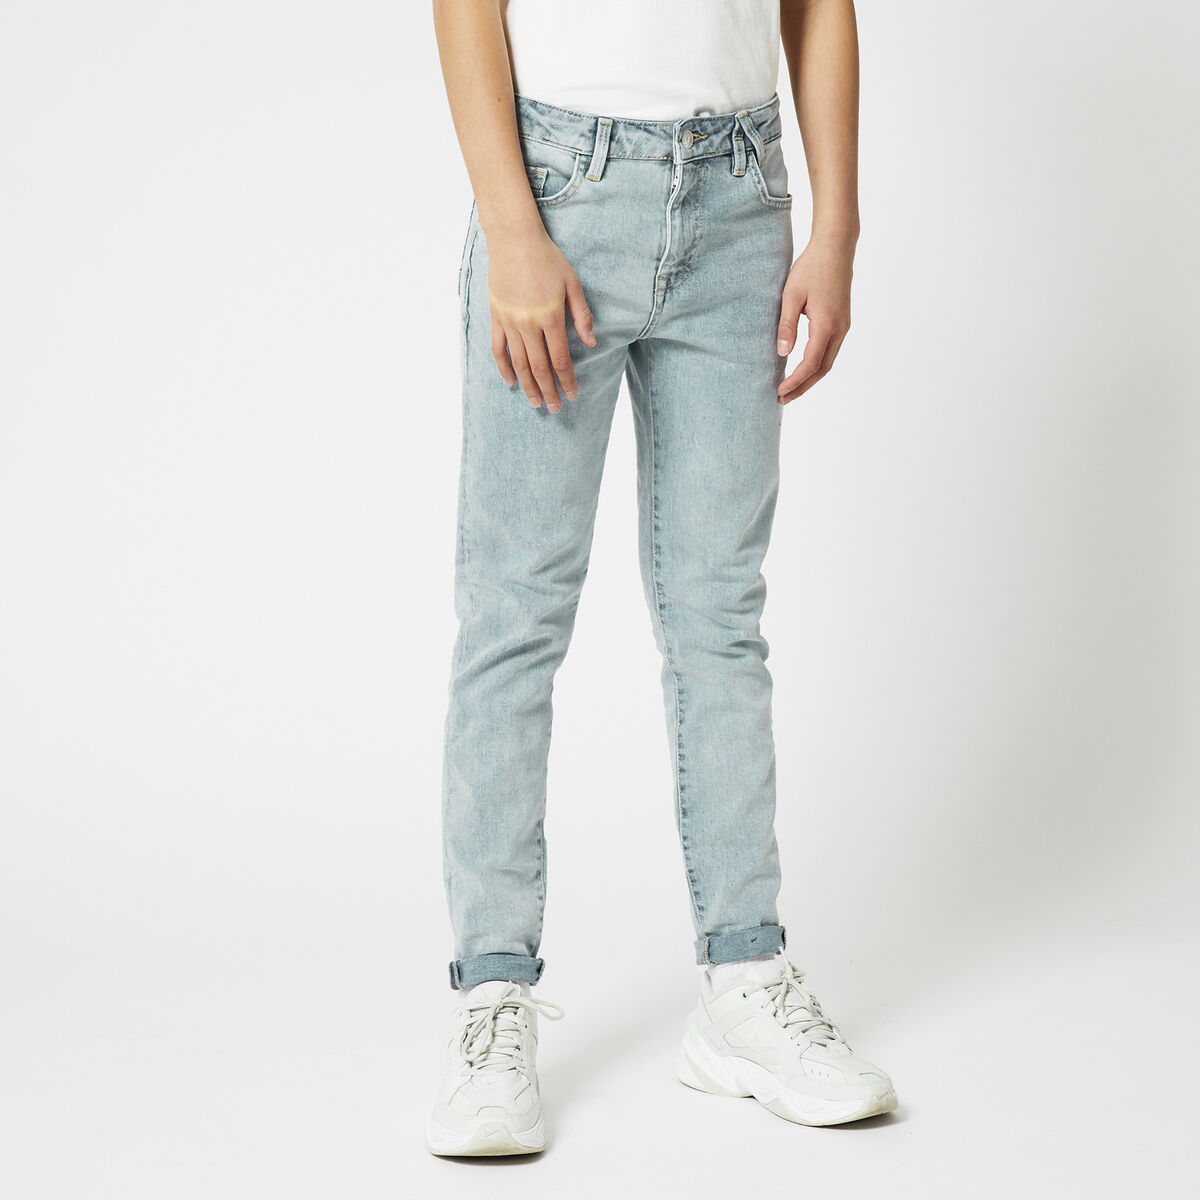 Boys Skinny jeans bleached denim Blue Buy Online